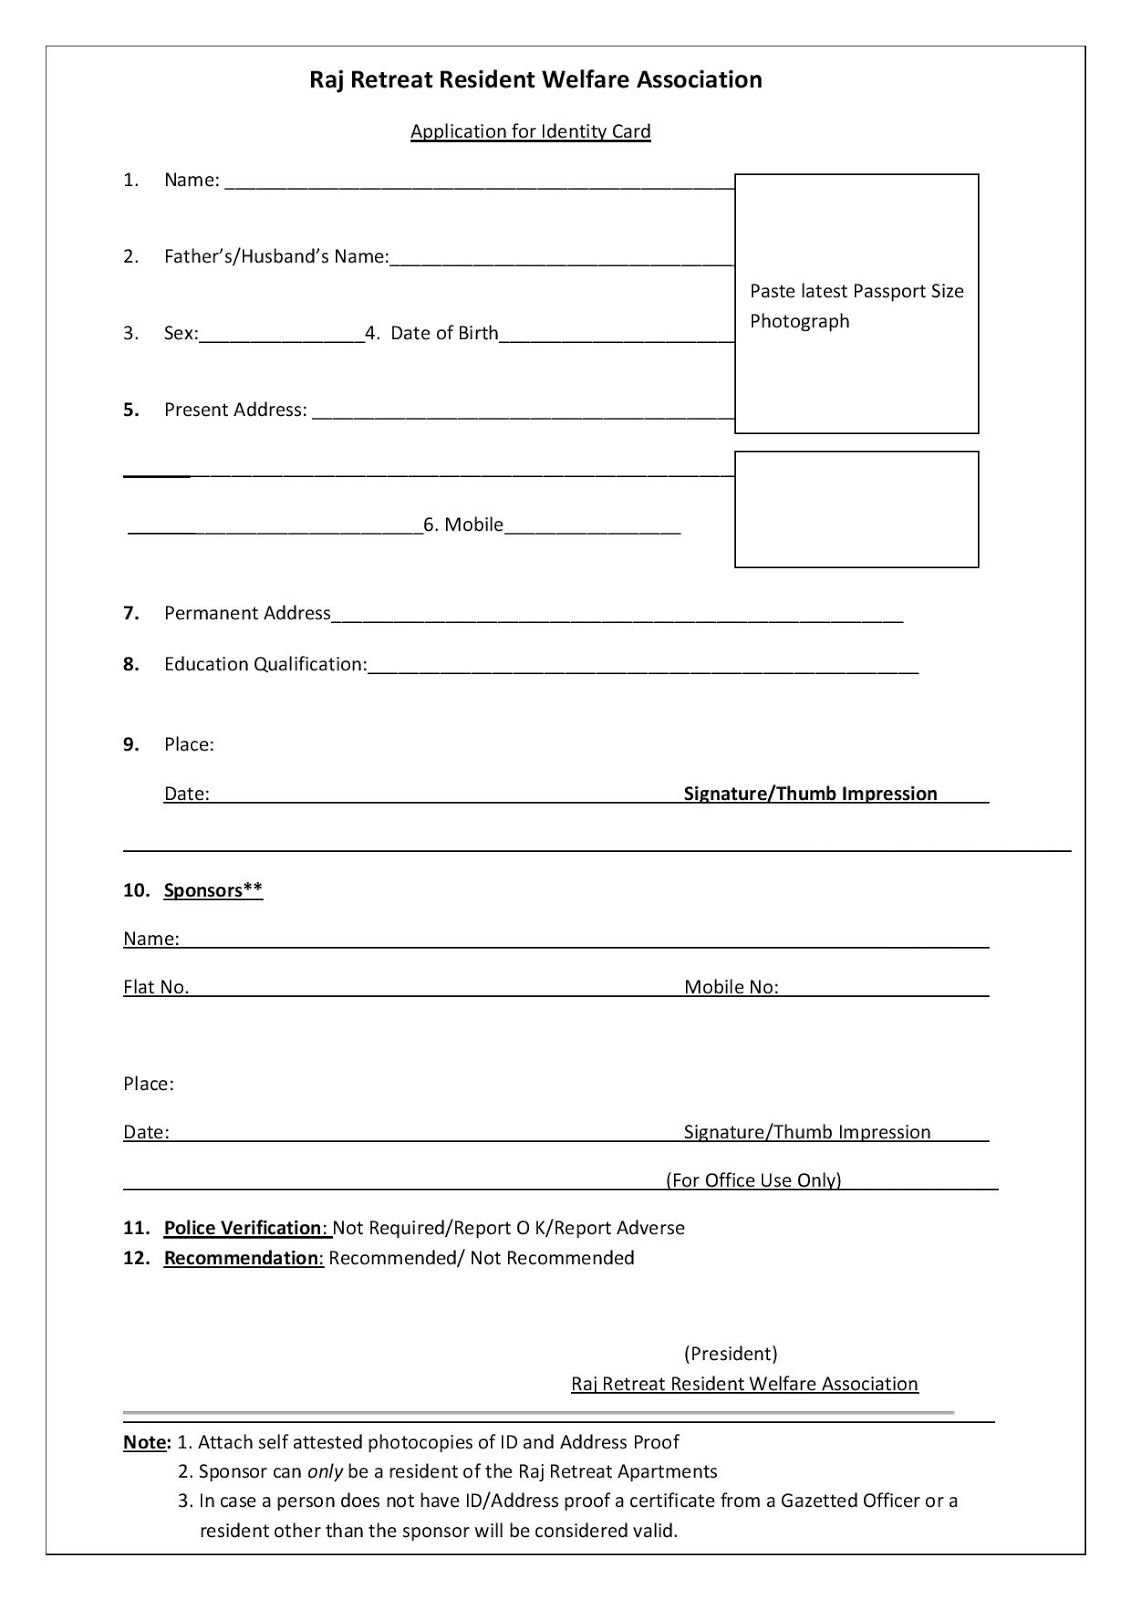 Raj Retreat Resident Welfare Association: Application Form for ID Card